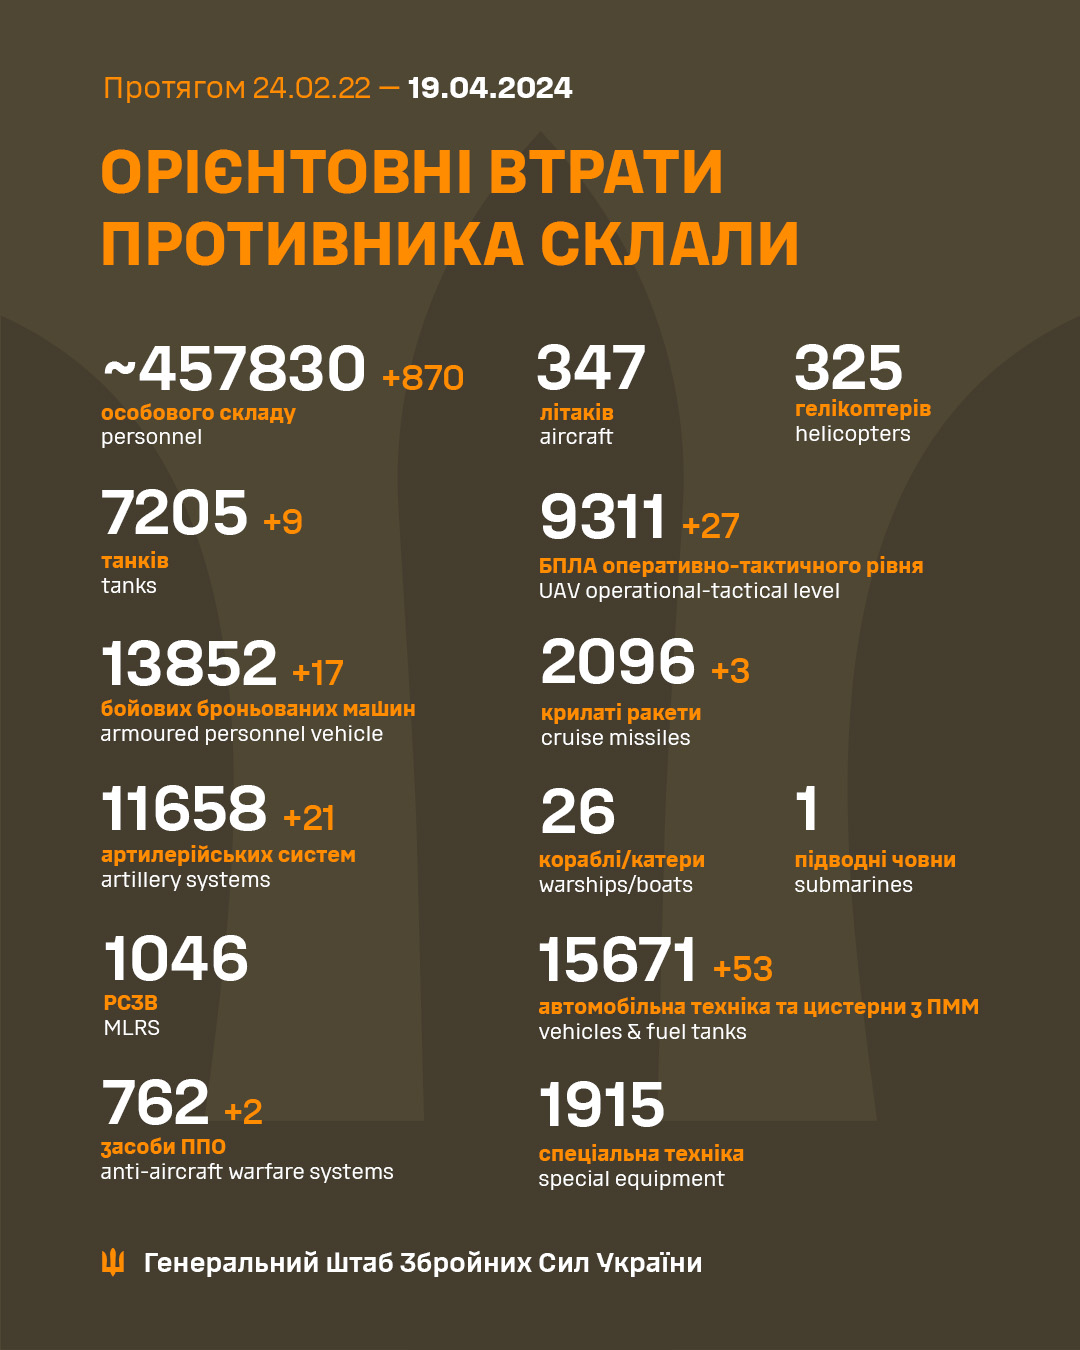 Потери армии РФ на 19 апреля 2024 года